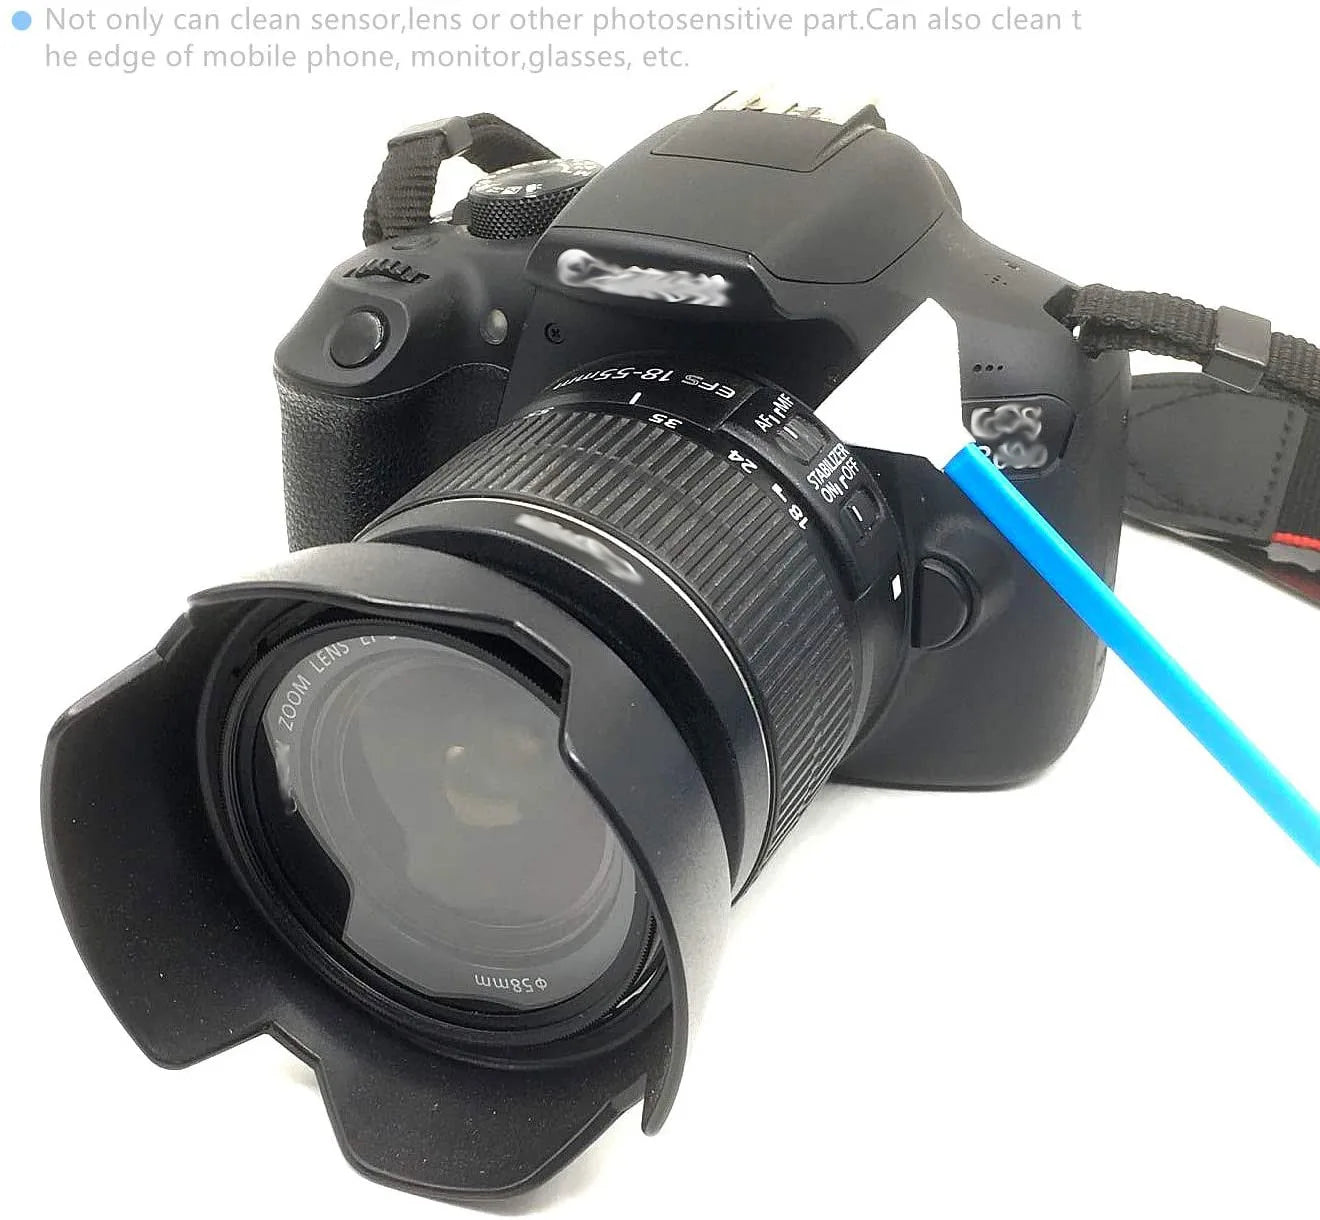 SANHOOII 10Pcs/20Pcs DSLR SLR Dry Full Frame Sensor Cleaning Swab Professional Digital Camera Cleaning Kit